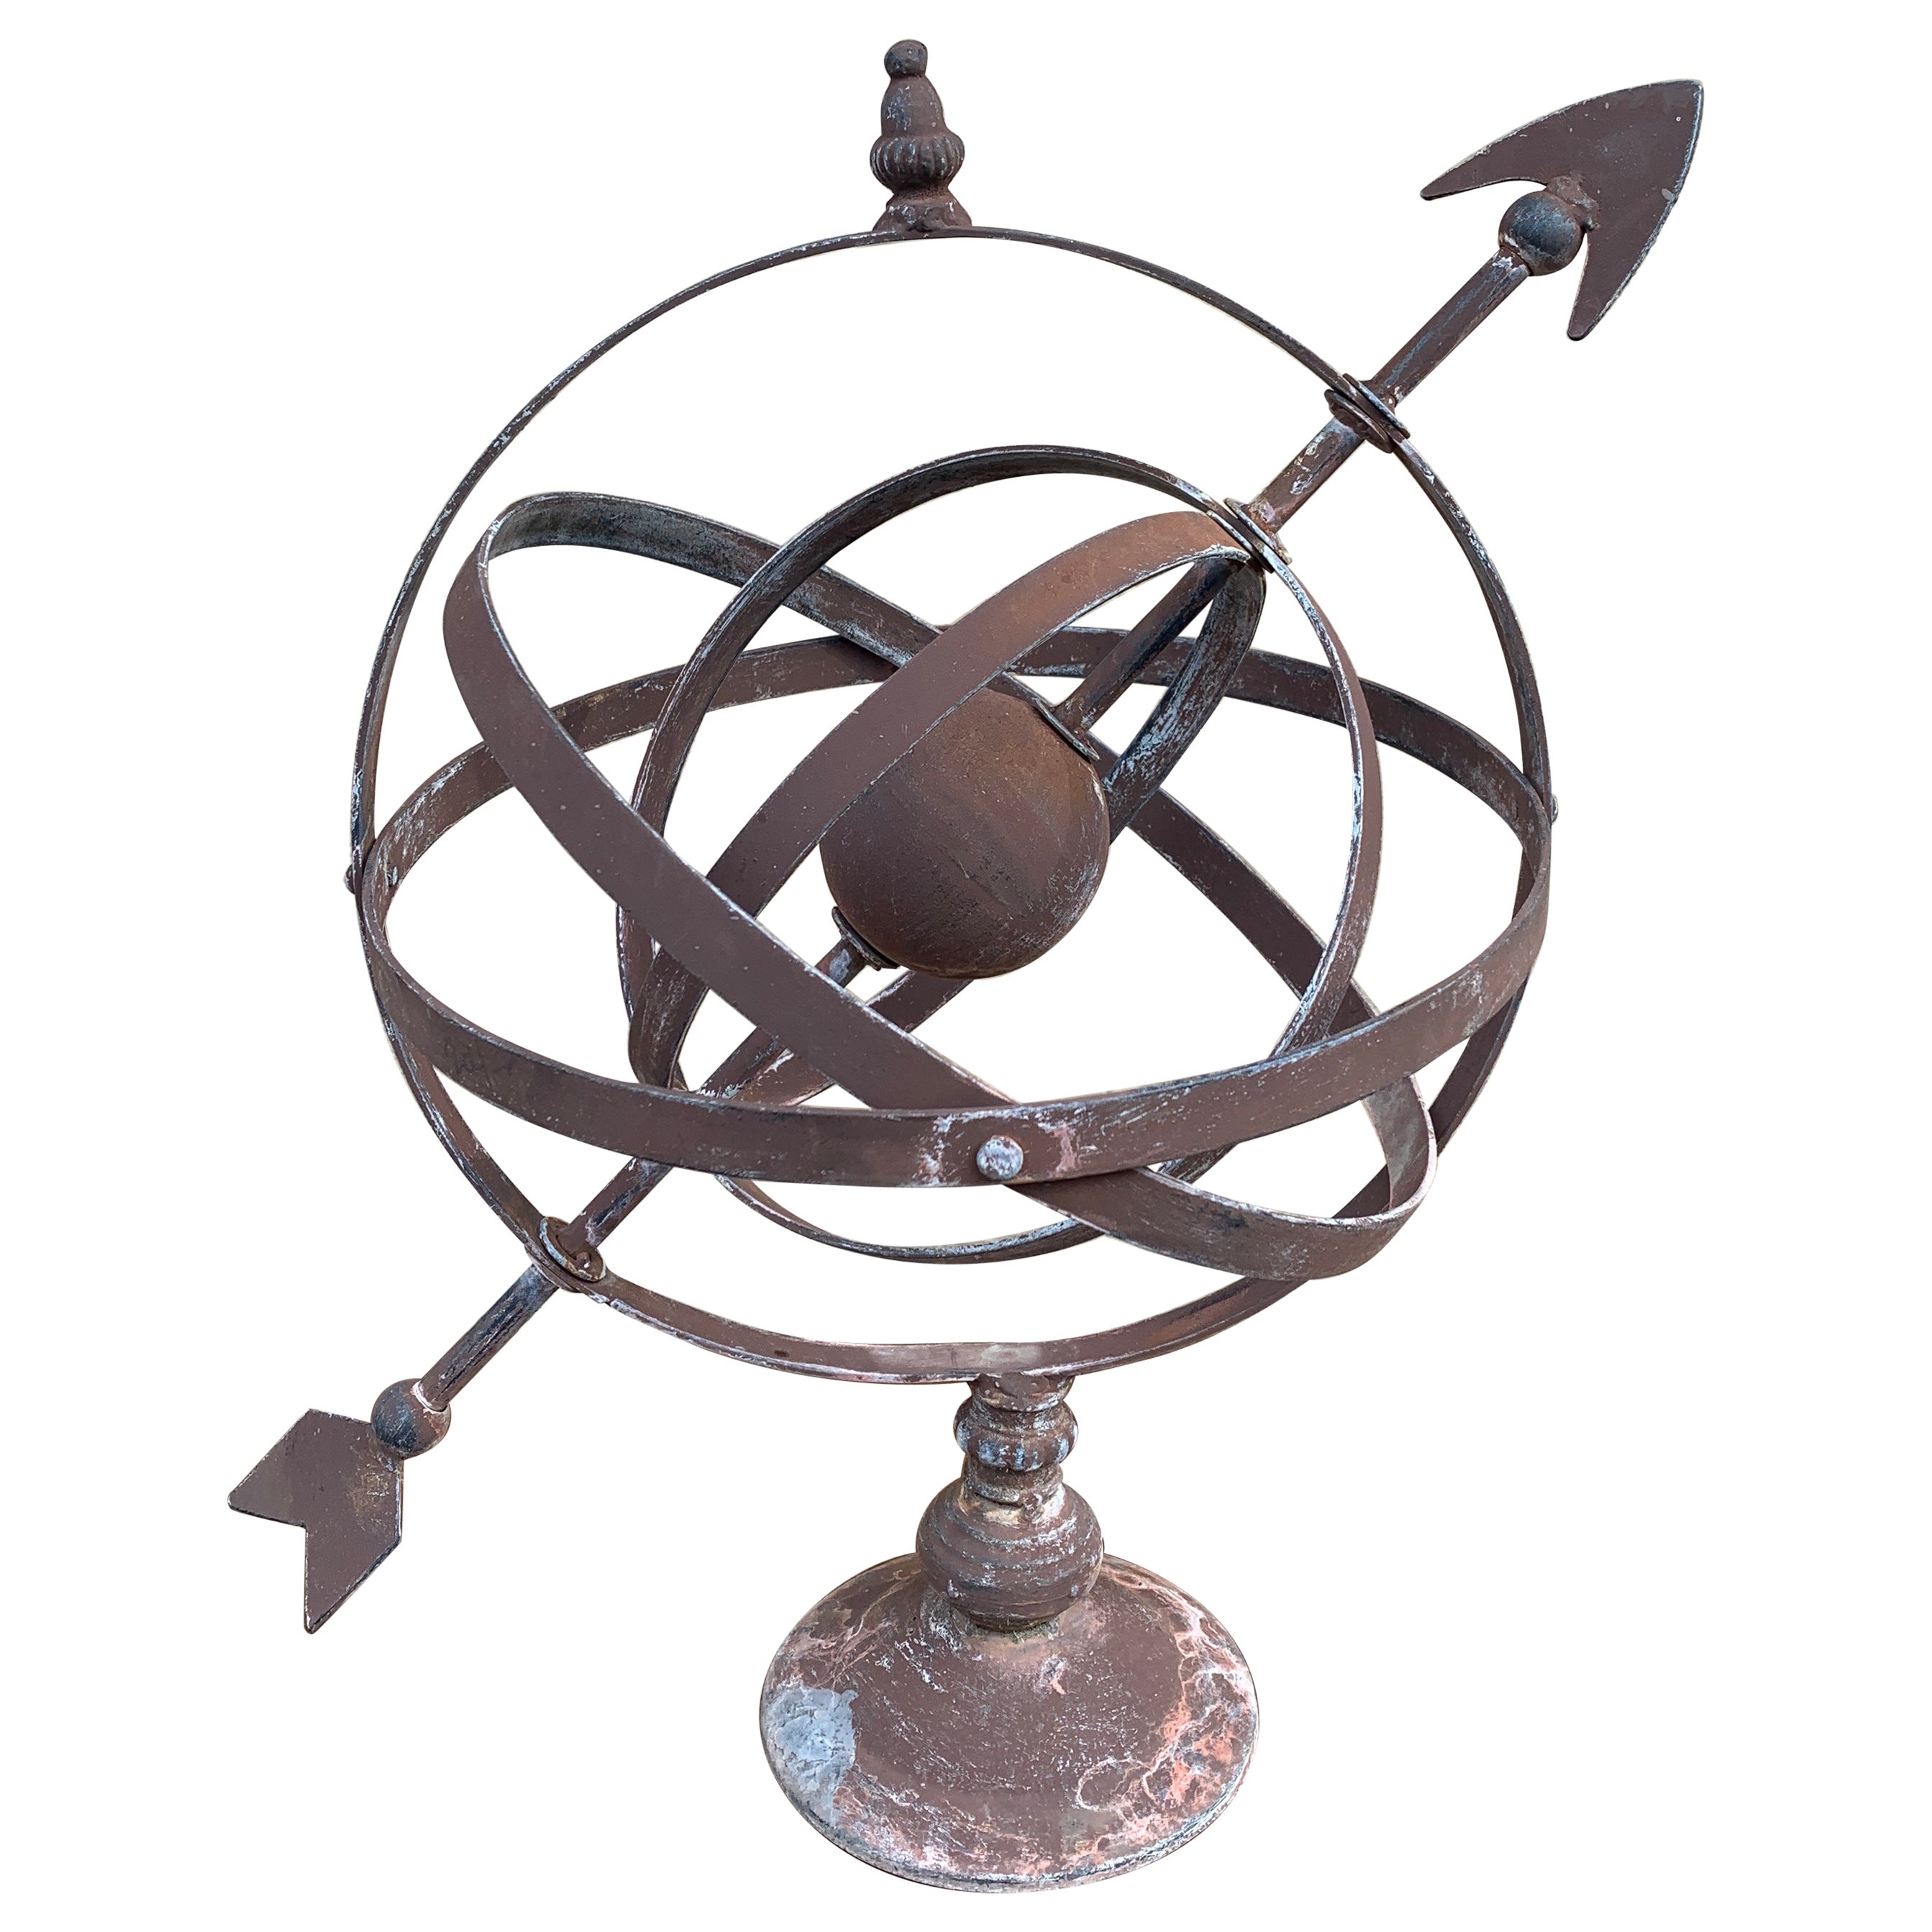 Vintage French Country Iron Garden Armillary Sundial